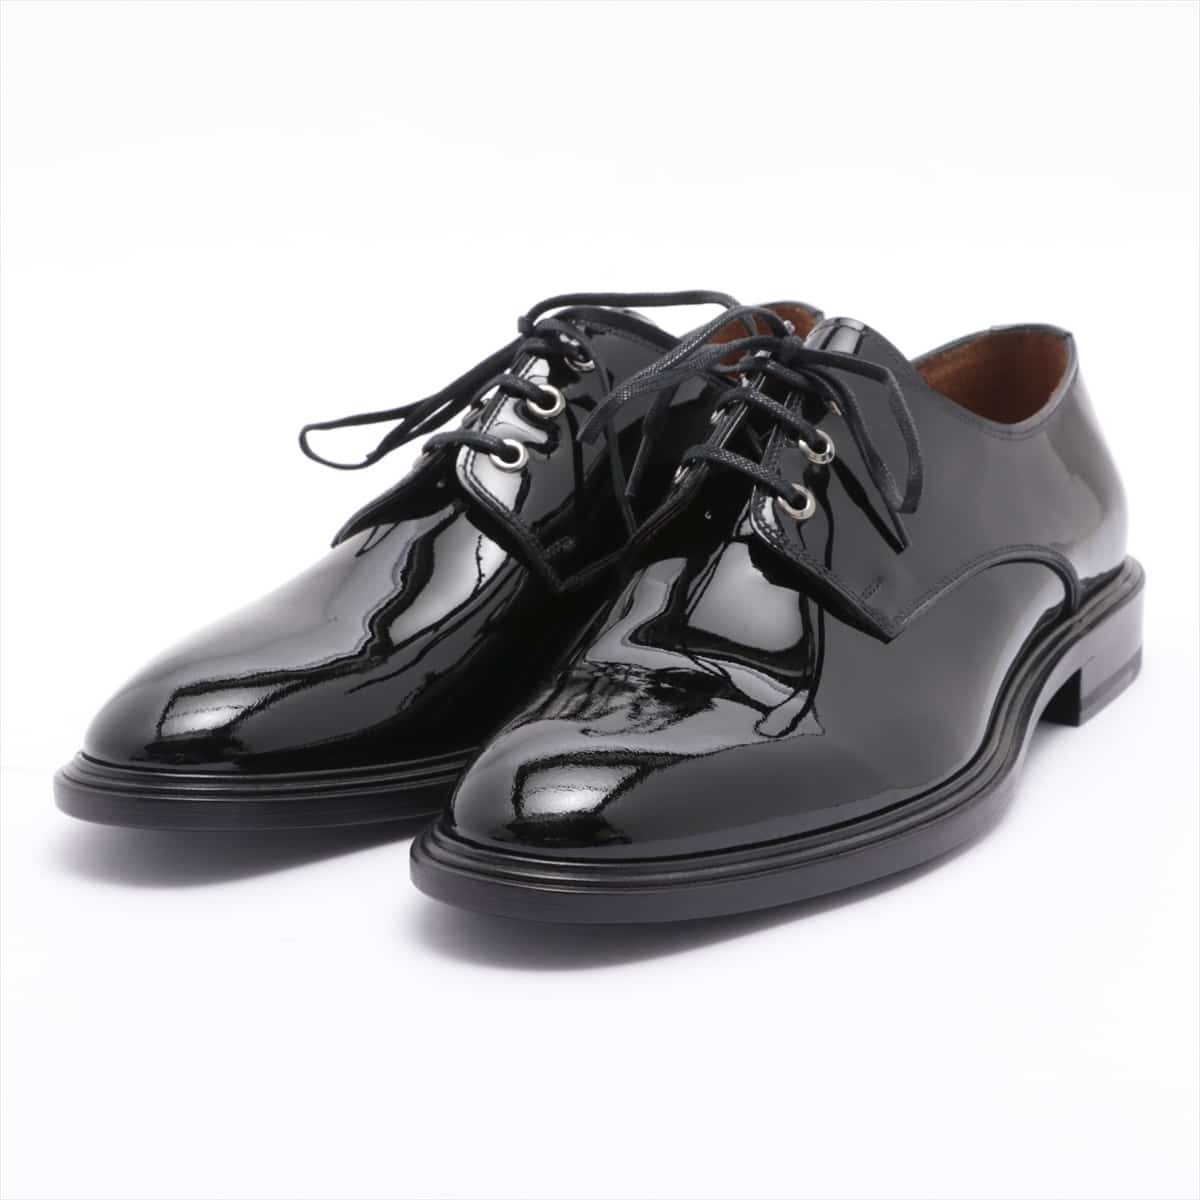 Givenchy Patent leather Leather shoes 42 1/2 Men's Black BM08050